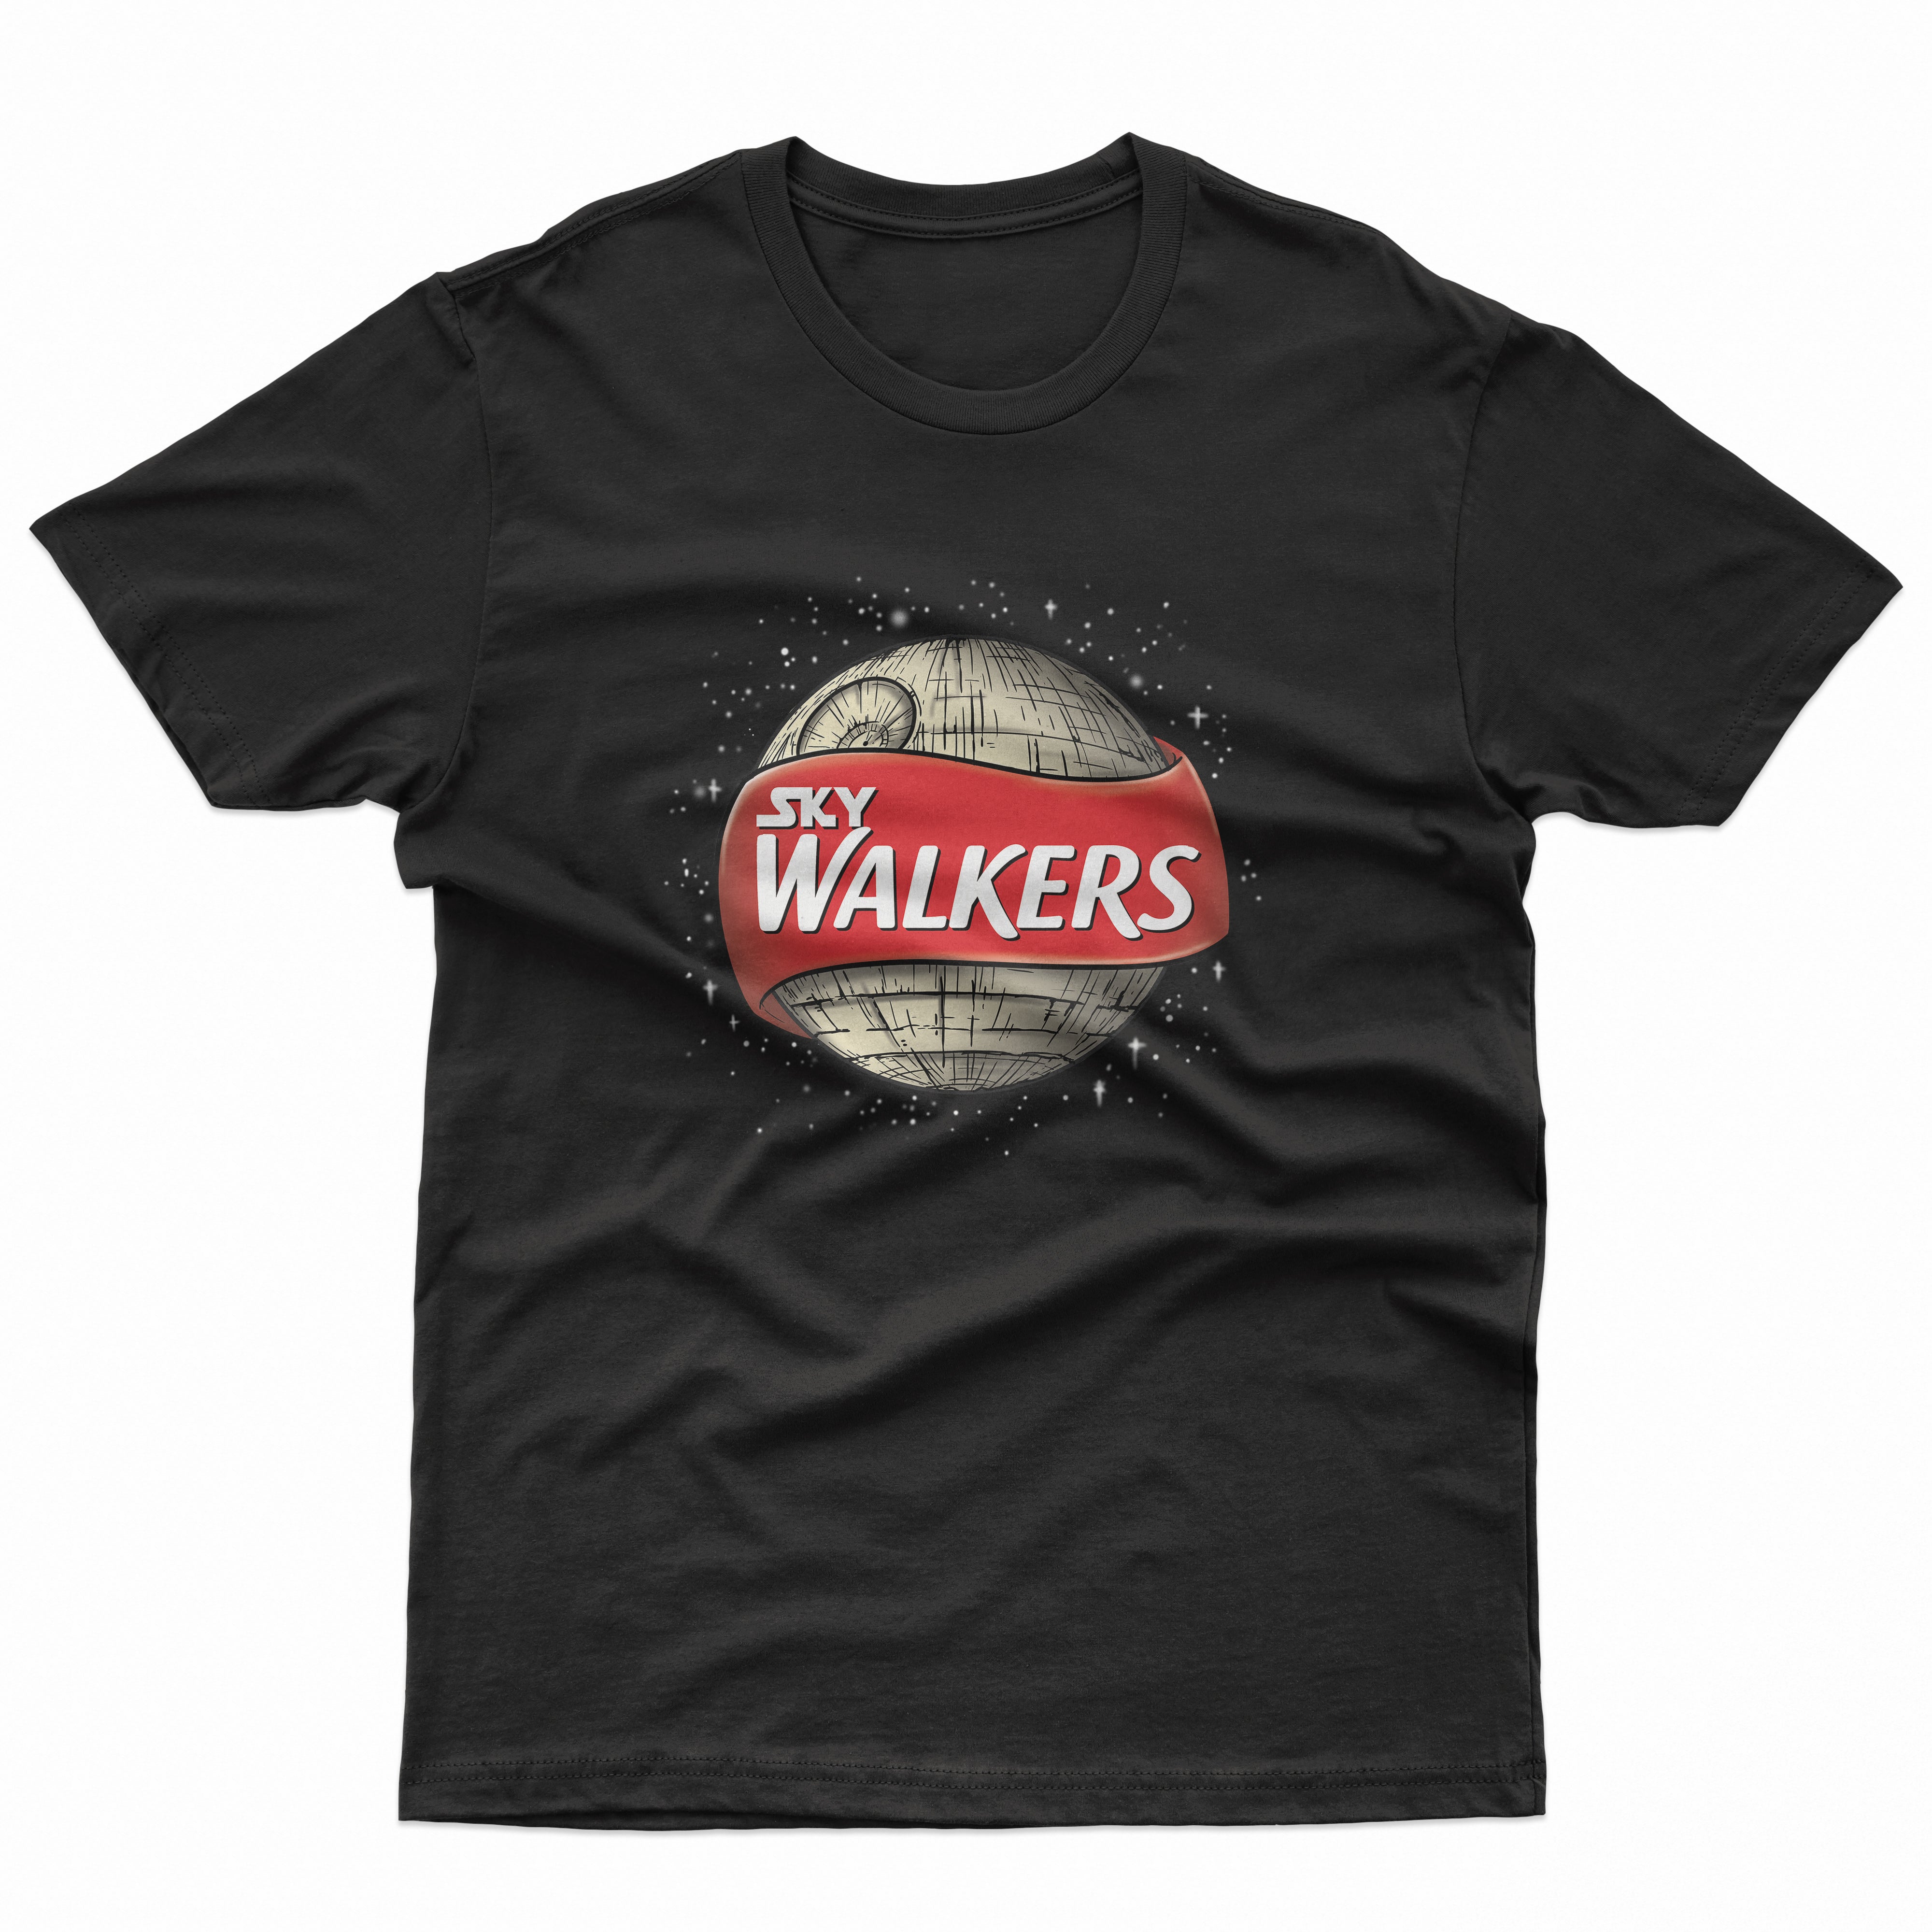 Sky Walkers T Shirt